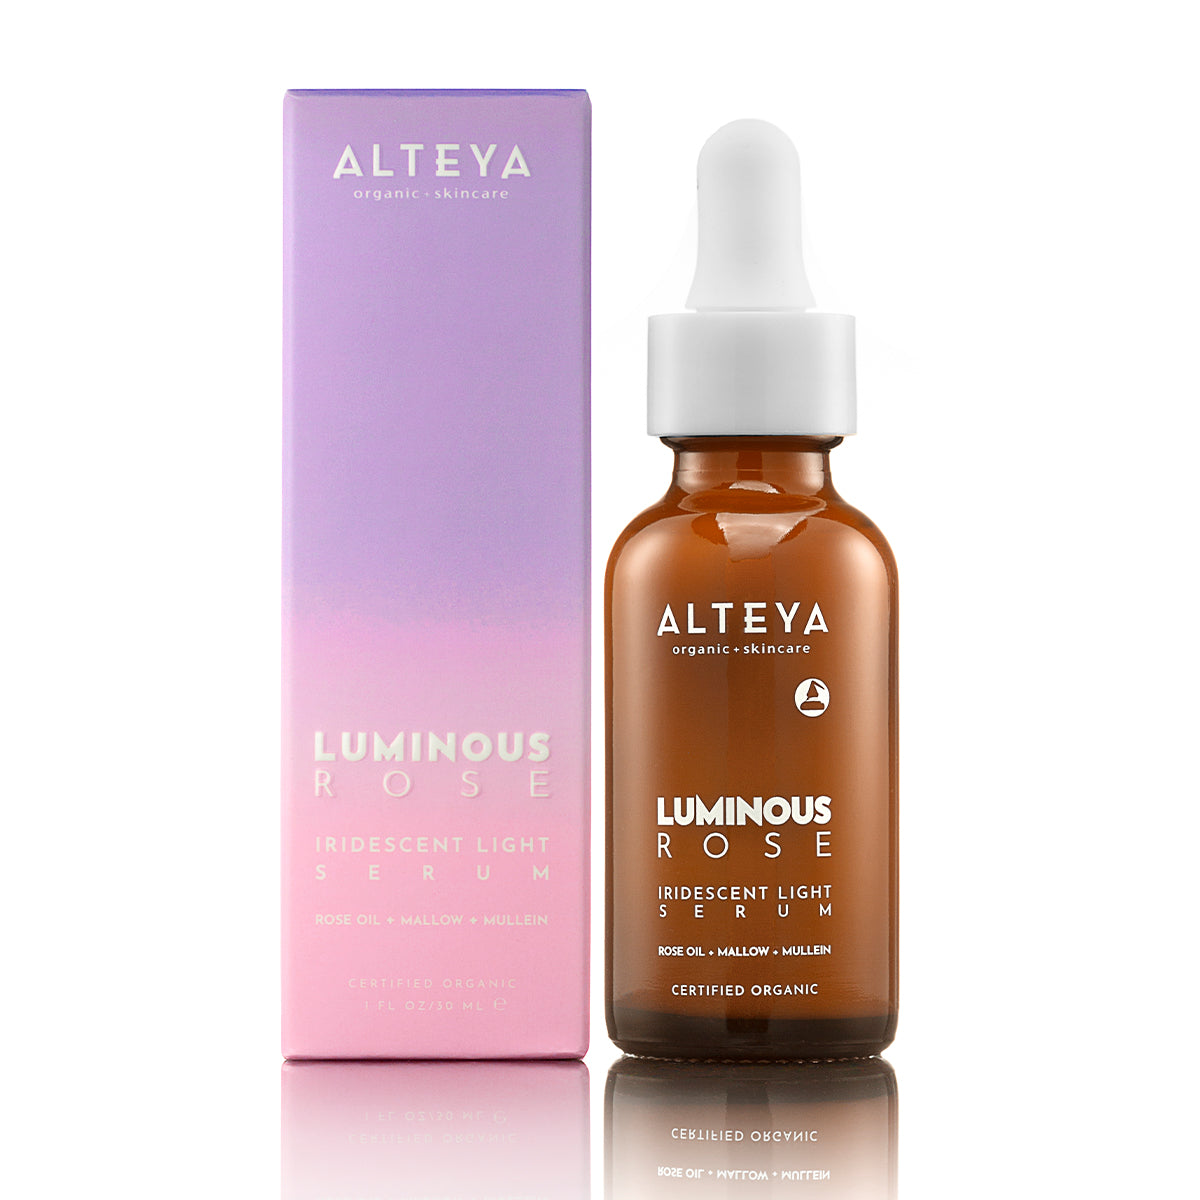 Iridescent Light Serum Luminous Rose 30ml by Alteya Organics is a moisturizing serum that deeply hydrates the skin.